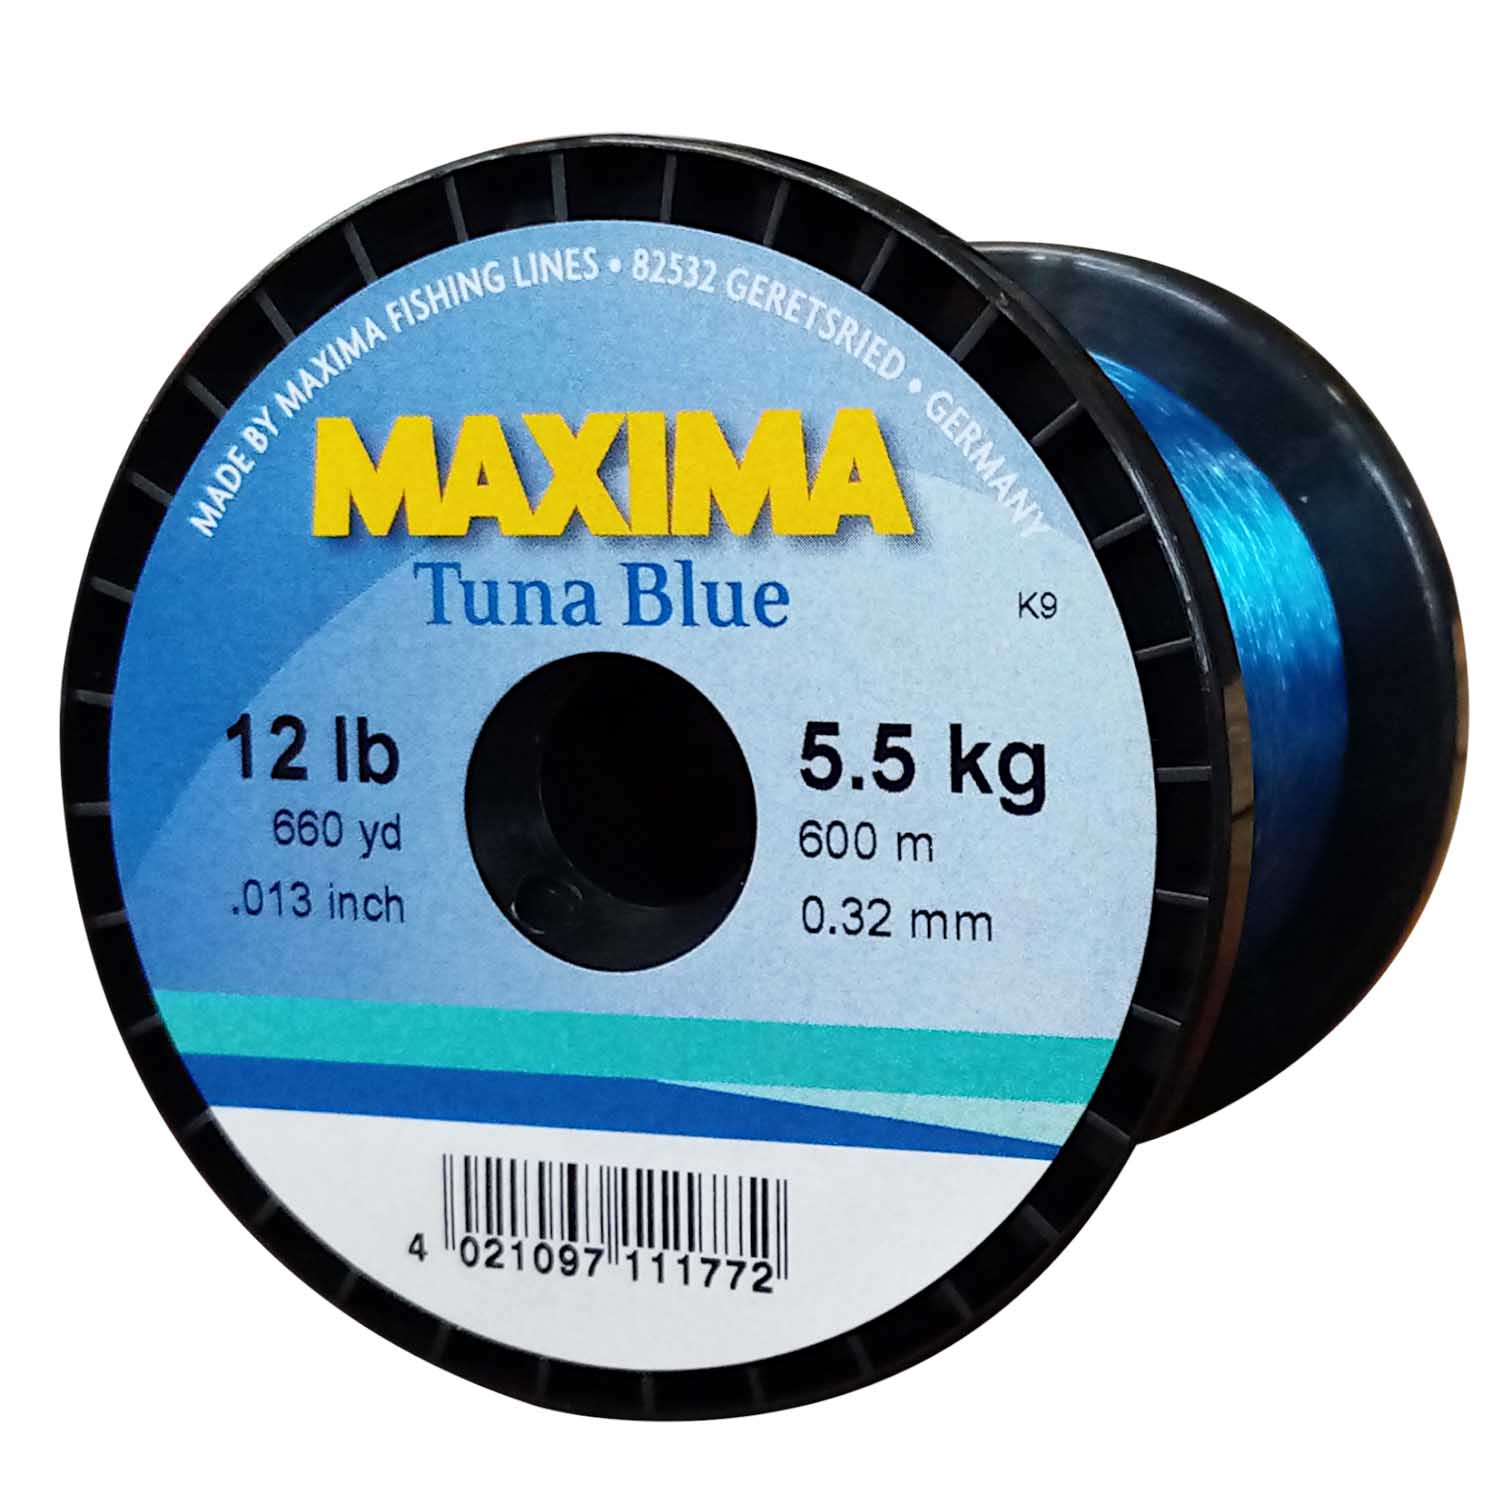 Maxima Nylon Fishing Line, 5.5KG/12LB 0.32MM, Colour Marine Green